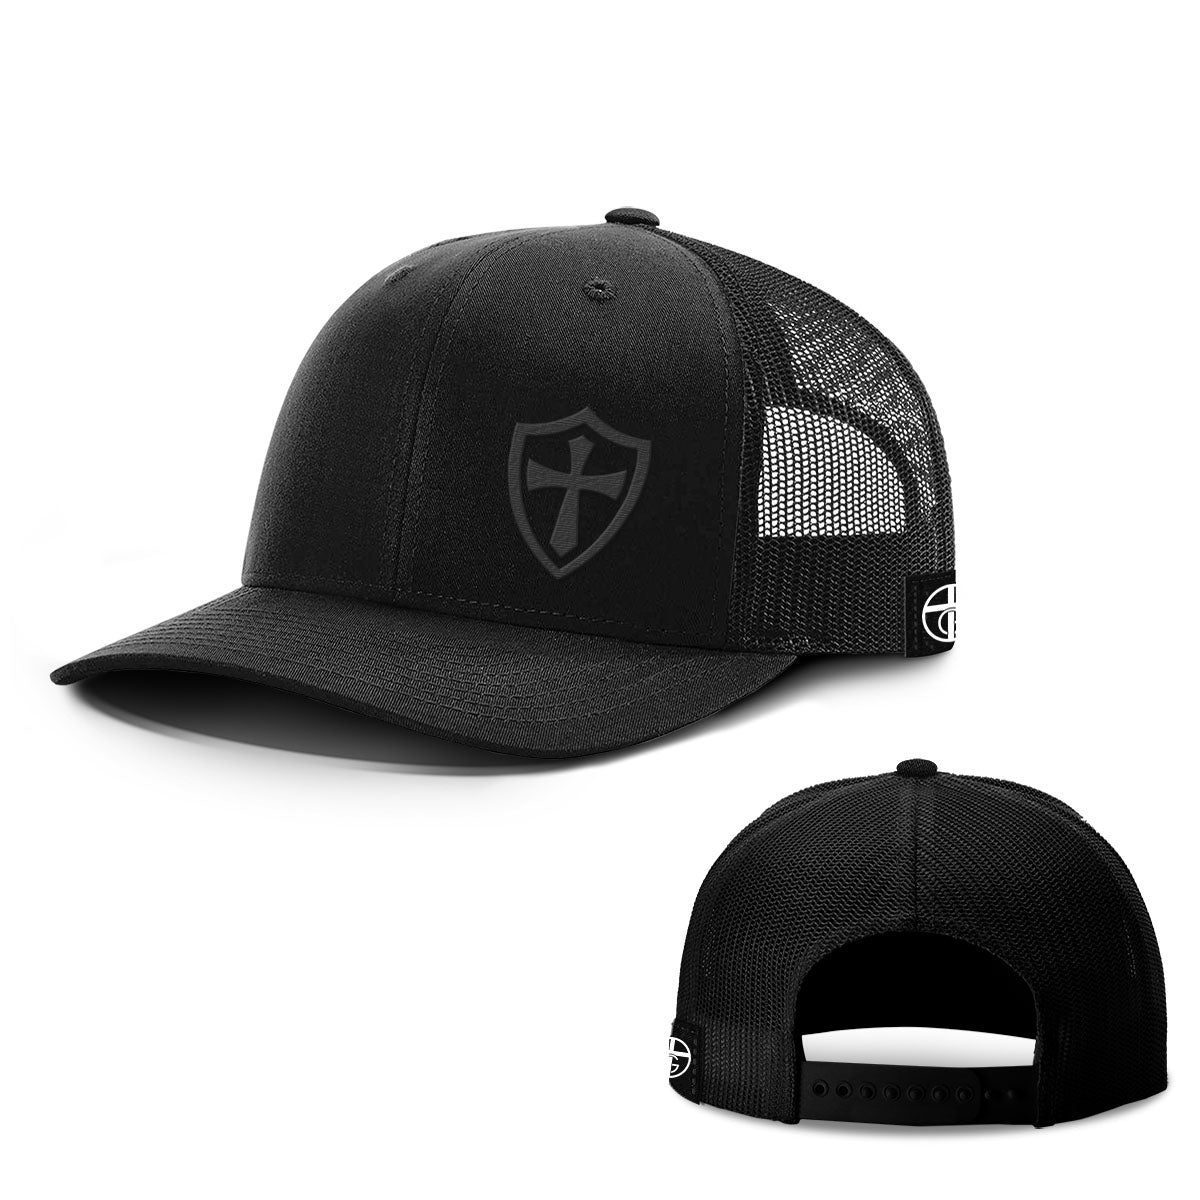 Cross Shield Blackout Version Hats